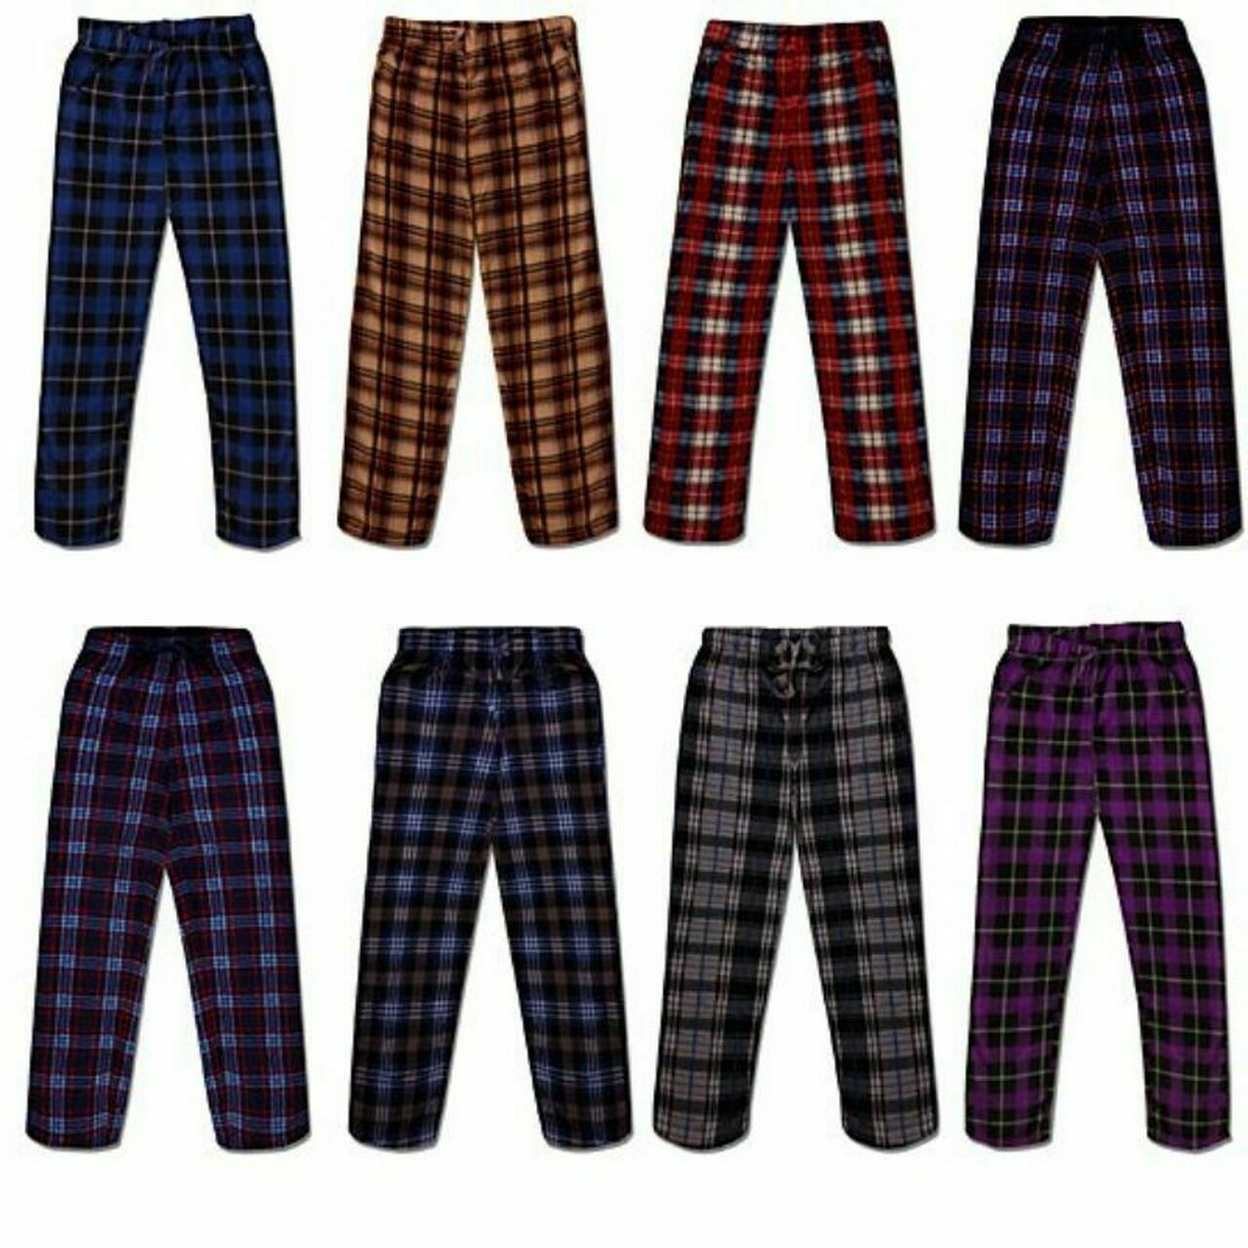 2-Pack: Men's Ultra Soft Cozy Flannel Fleece Plaid Pajama Sleep Bottom Lounge Pants - Black & Blue, Large